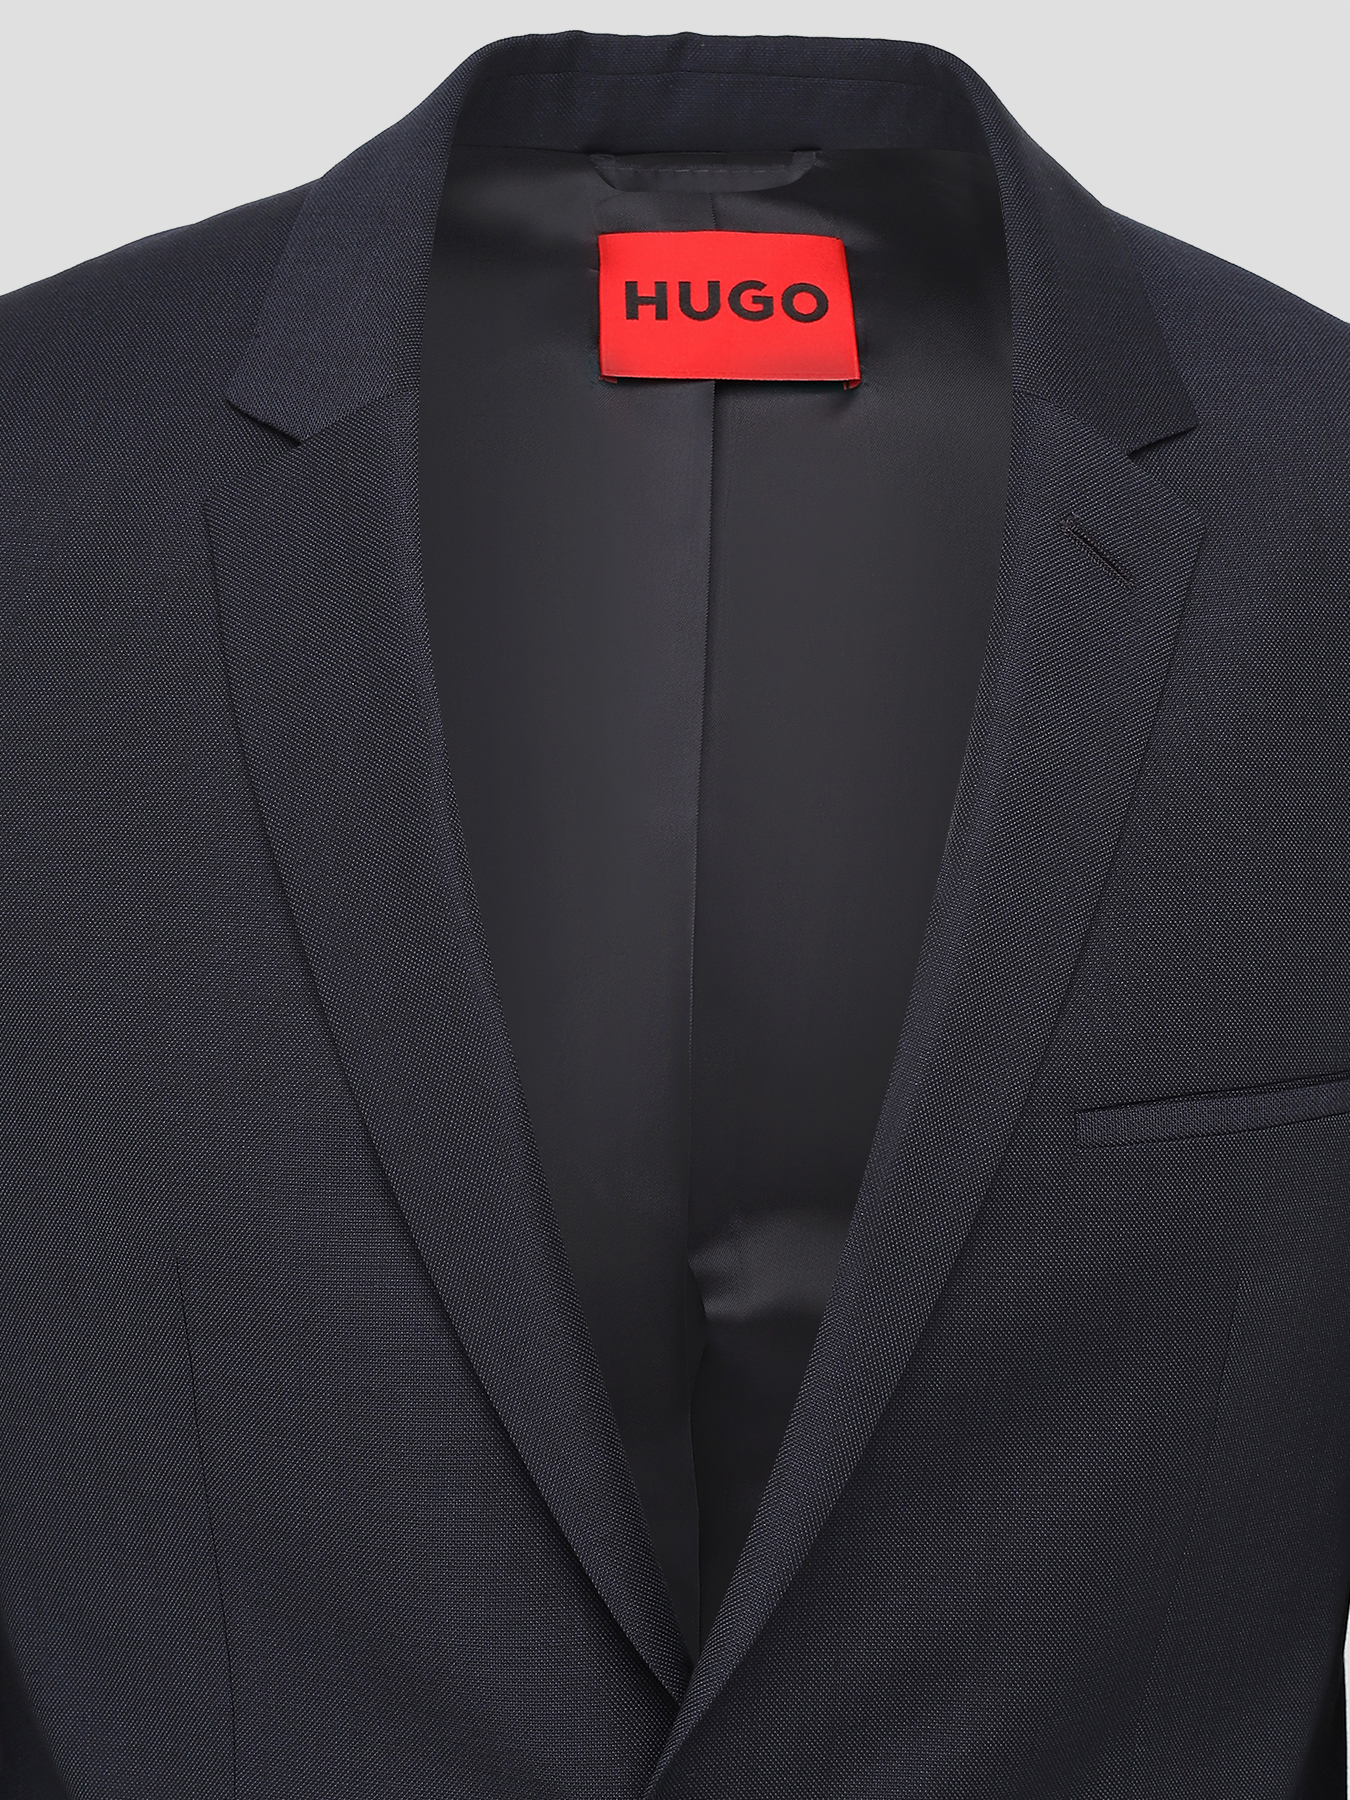 Классический костюм Arti HUGO 424683-026, цвет темно-синий, размер 50 - фото 7